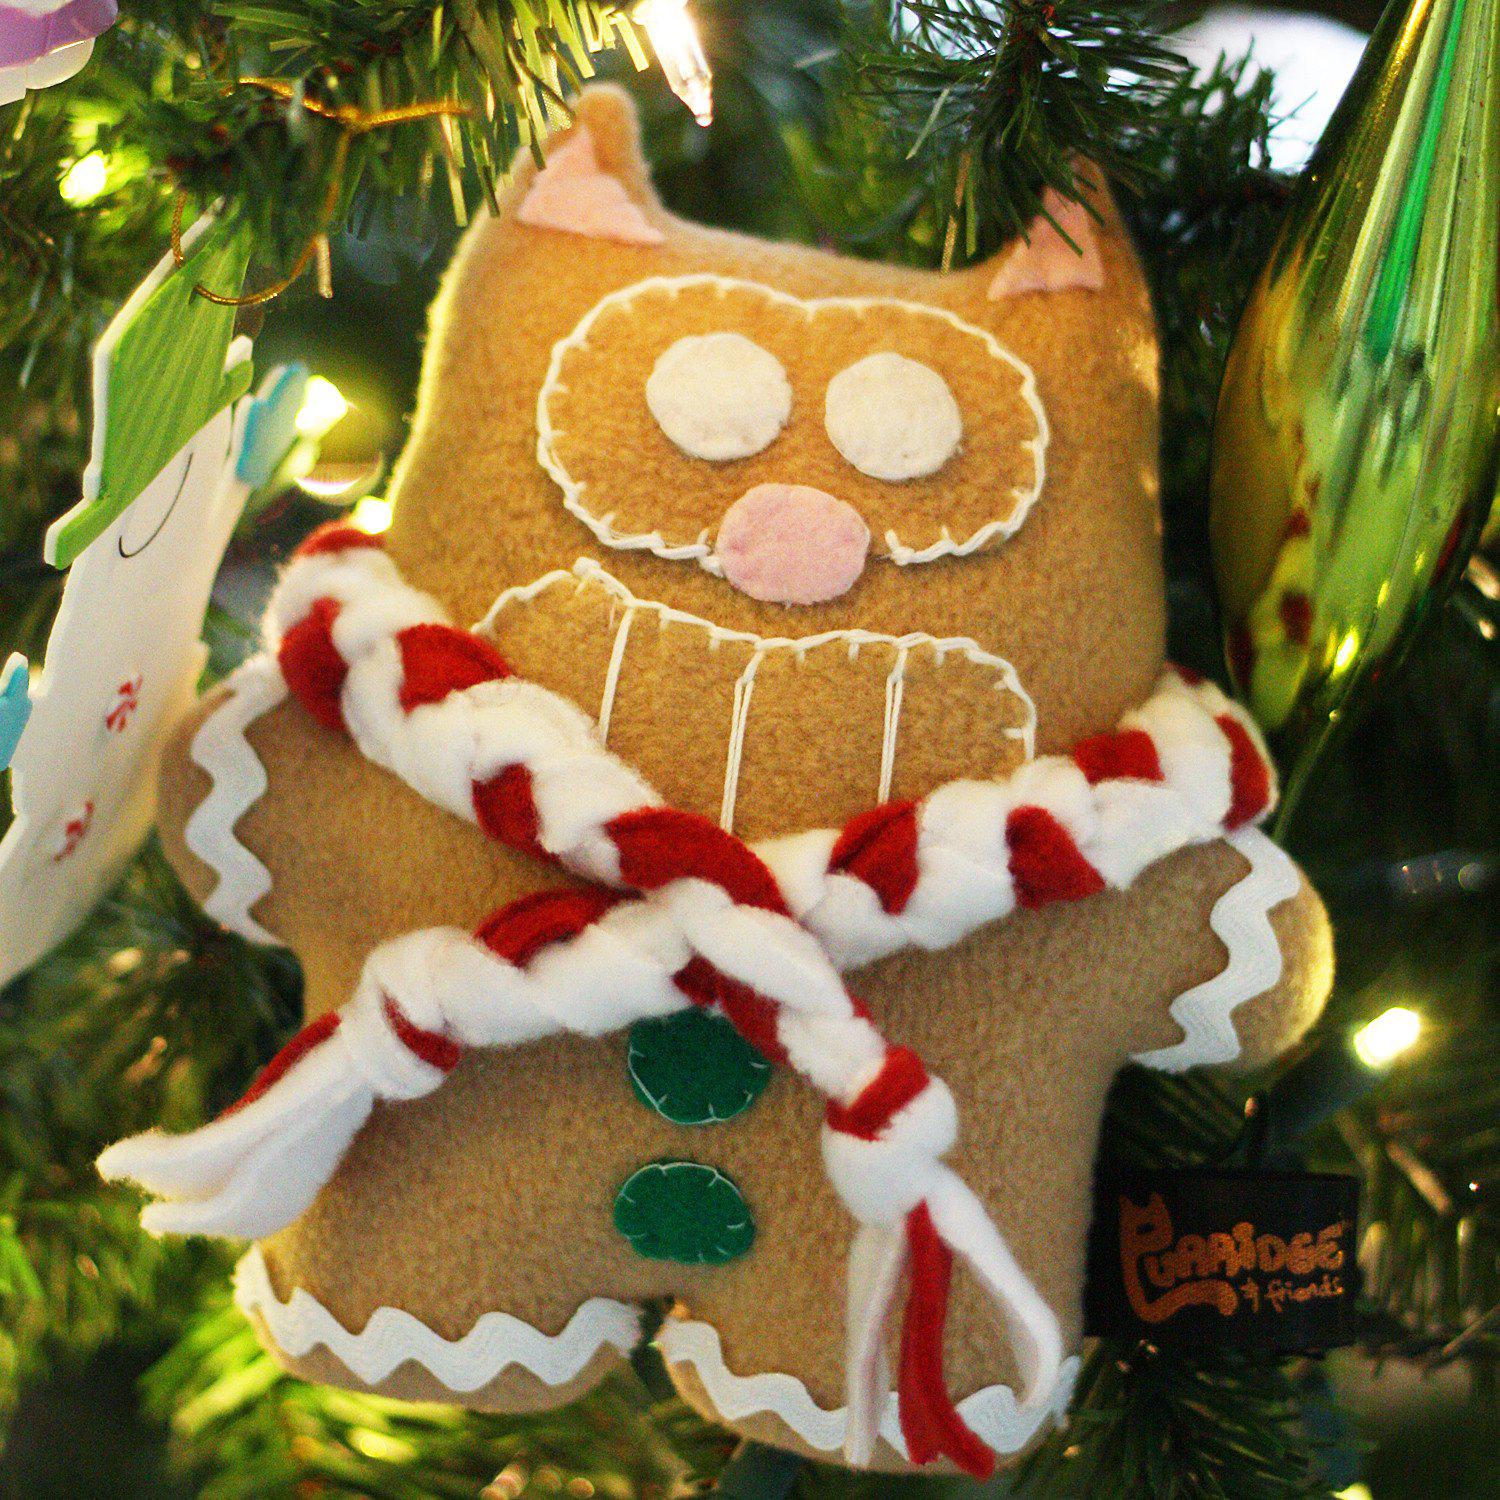 Handmade Peppermint Gingerbread Purridge 7" Plush - Furry Feline Creatives 